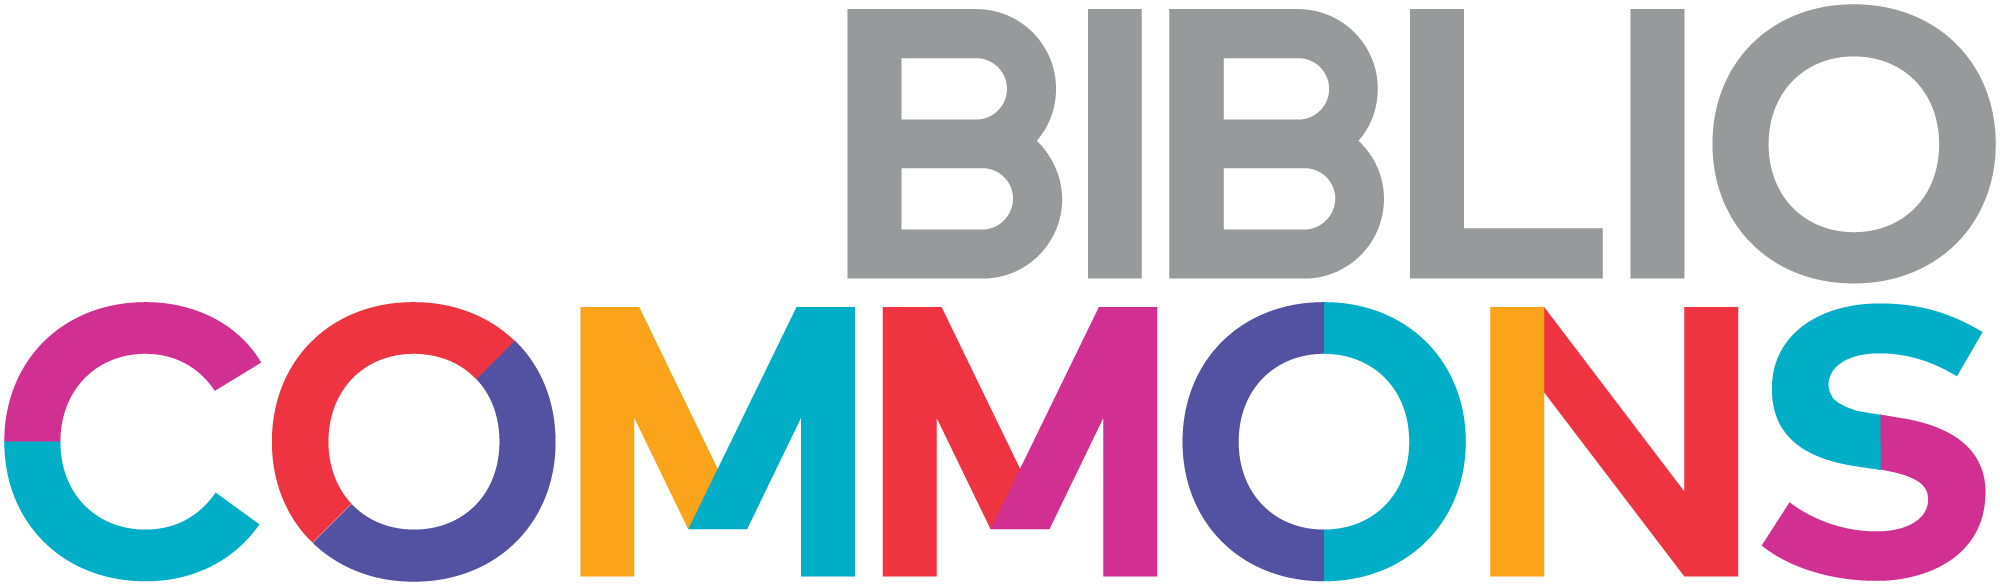 BiblioCommons_logo_RGB